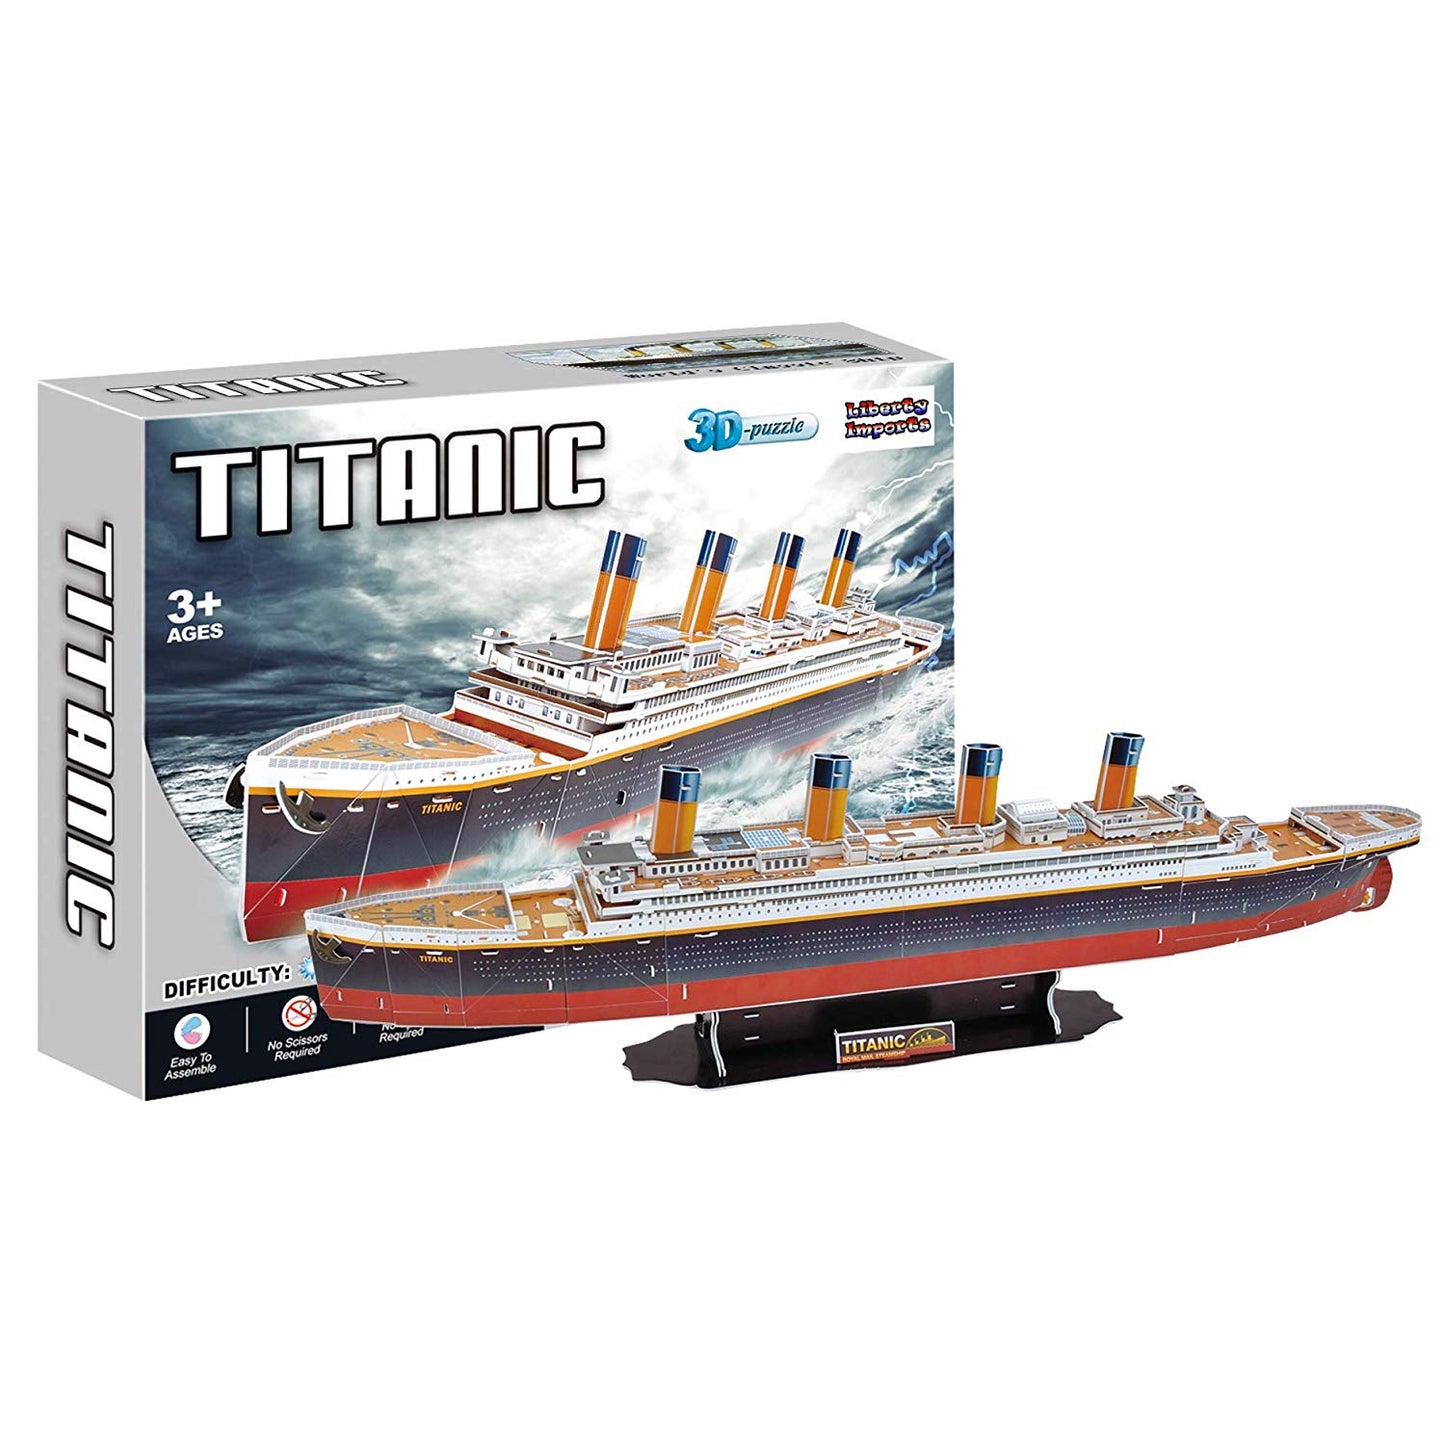 Titanic 3D Puzzle - oddgifts.com